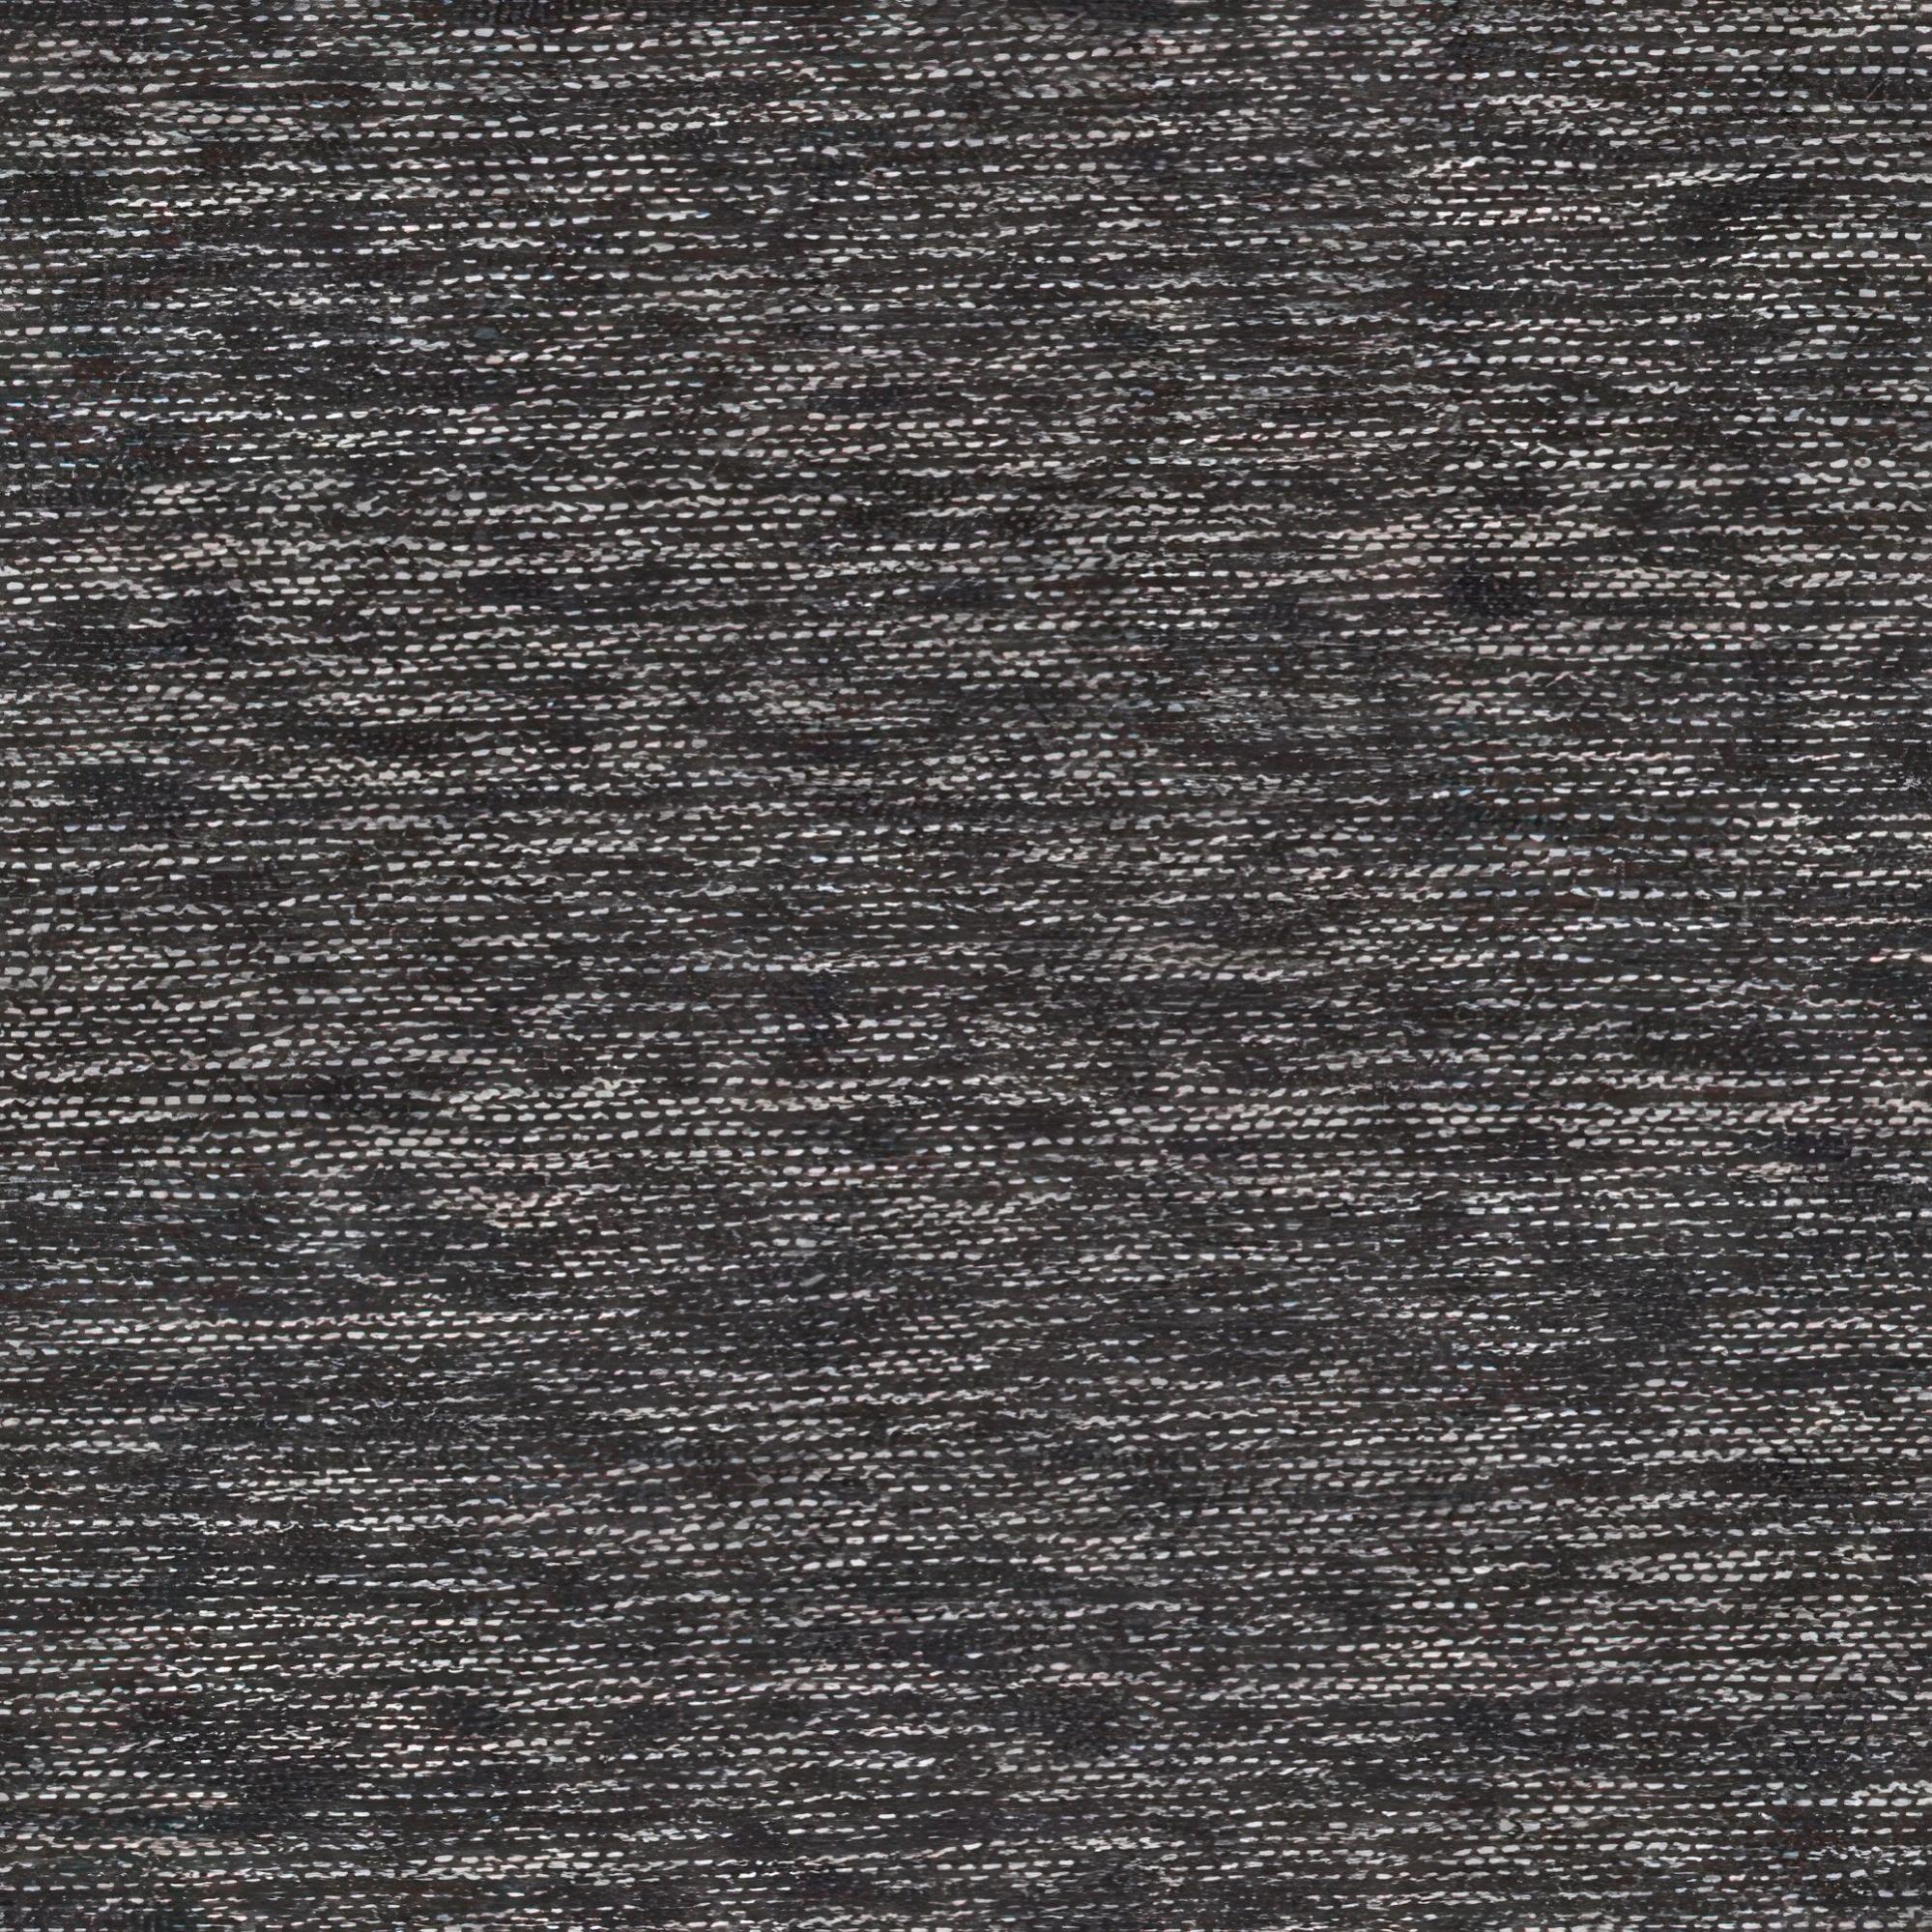 Tela al corte tapicería jacquard killin negro ancho 140 cm